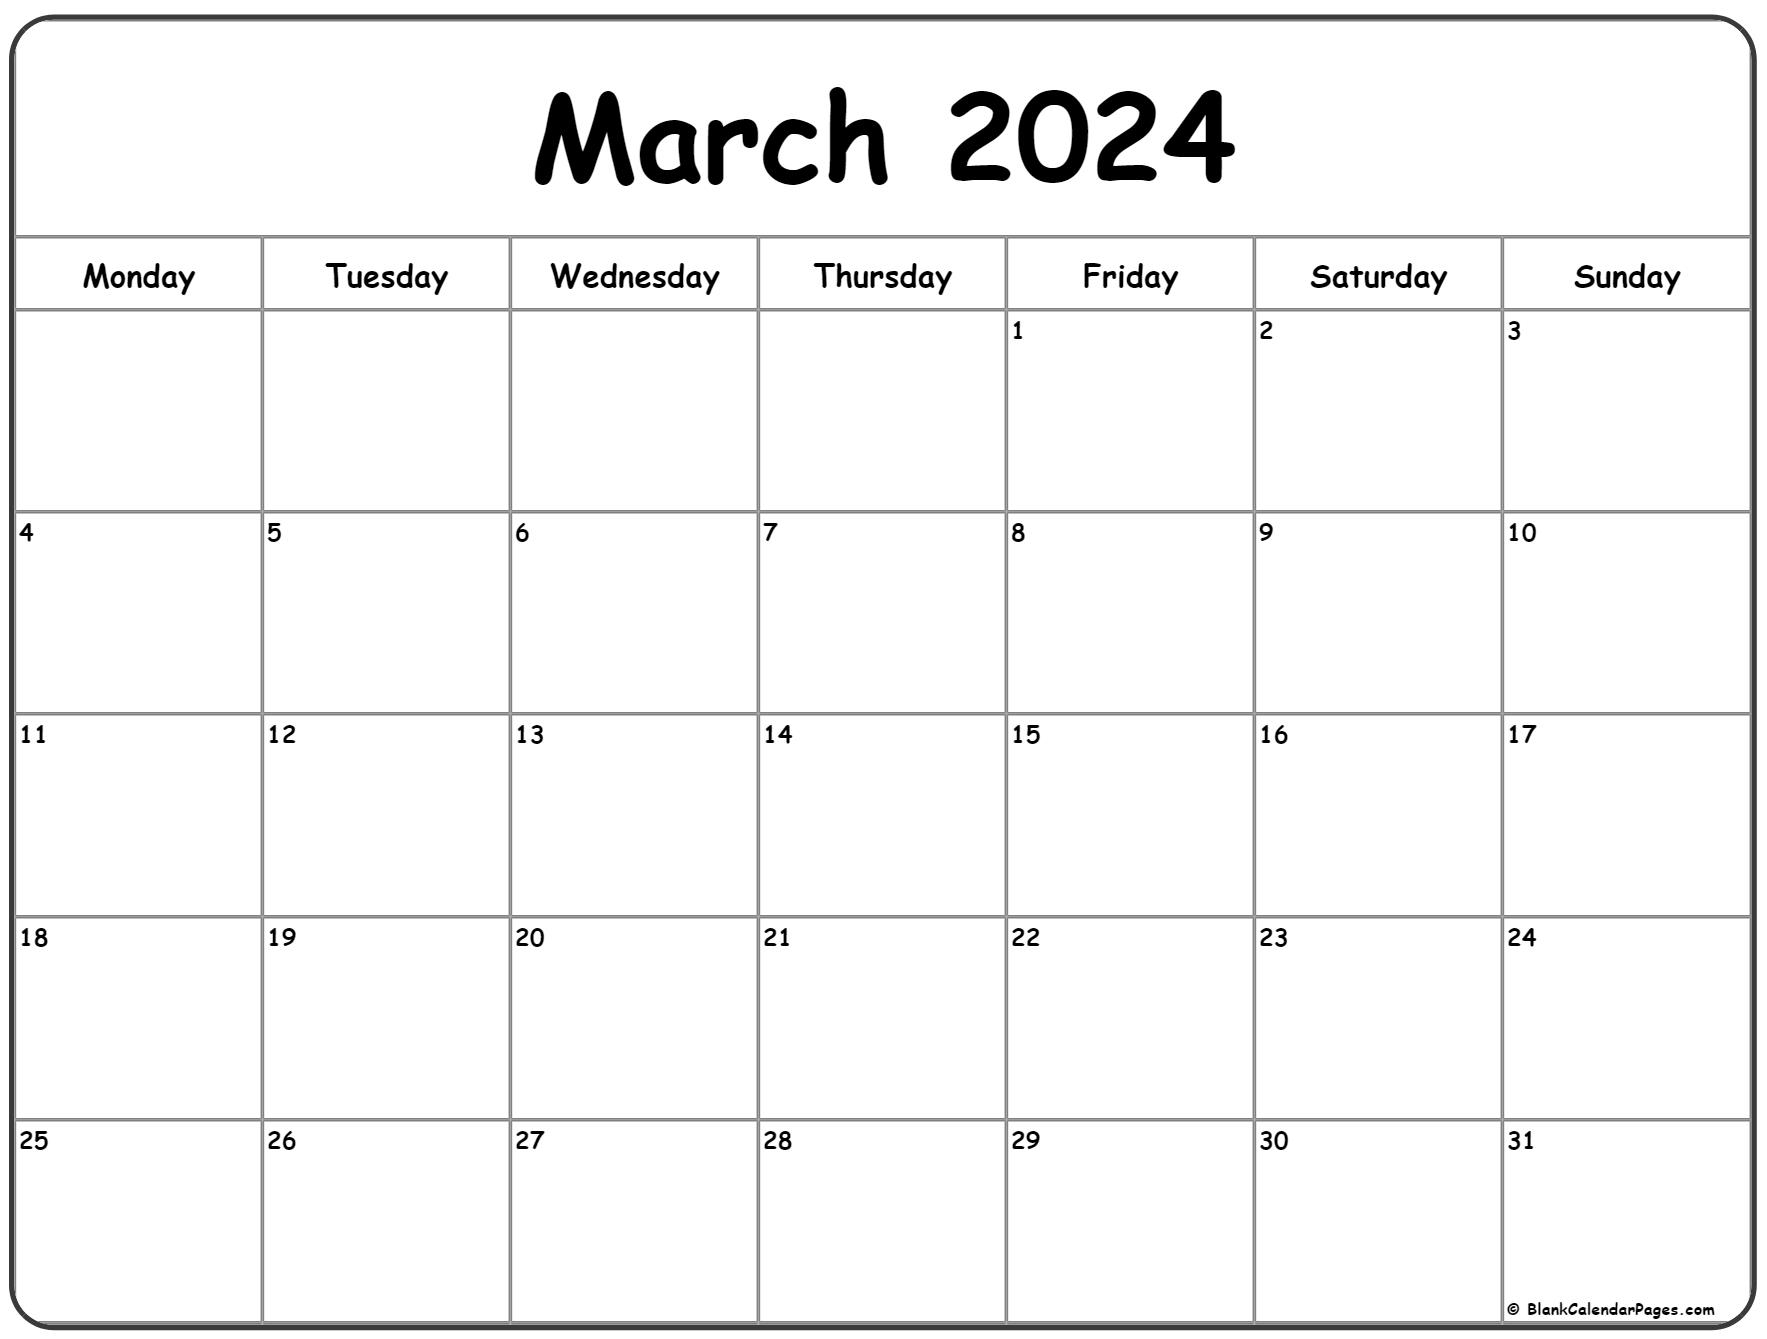 March 2024 Monday Calendar | Monday To Sunday for Free-Printable-Calendar March 2024